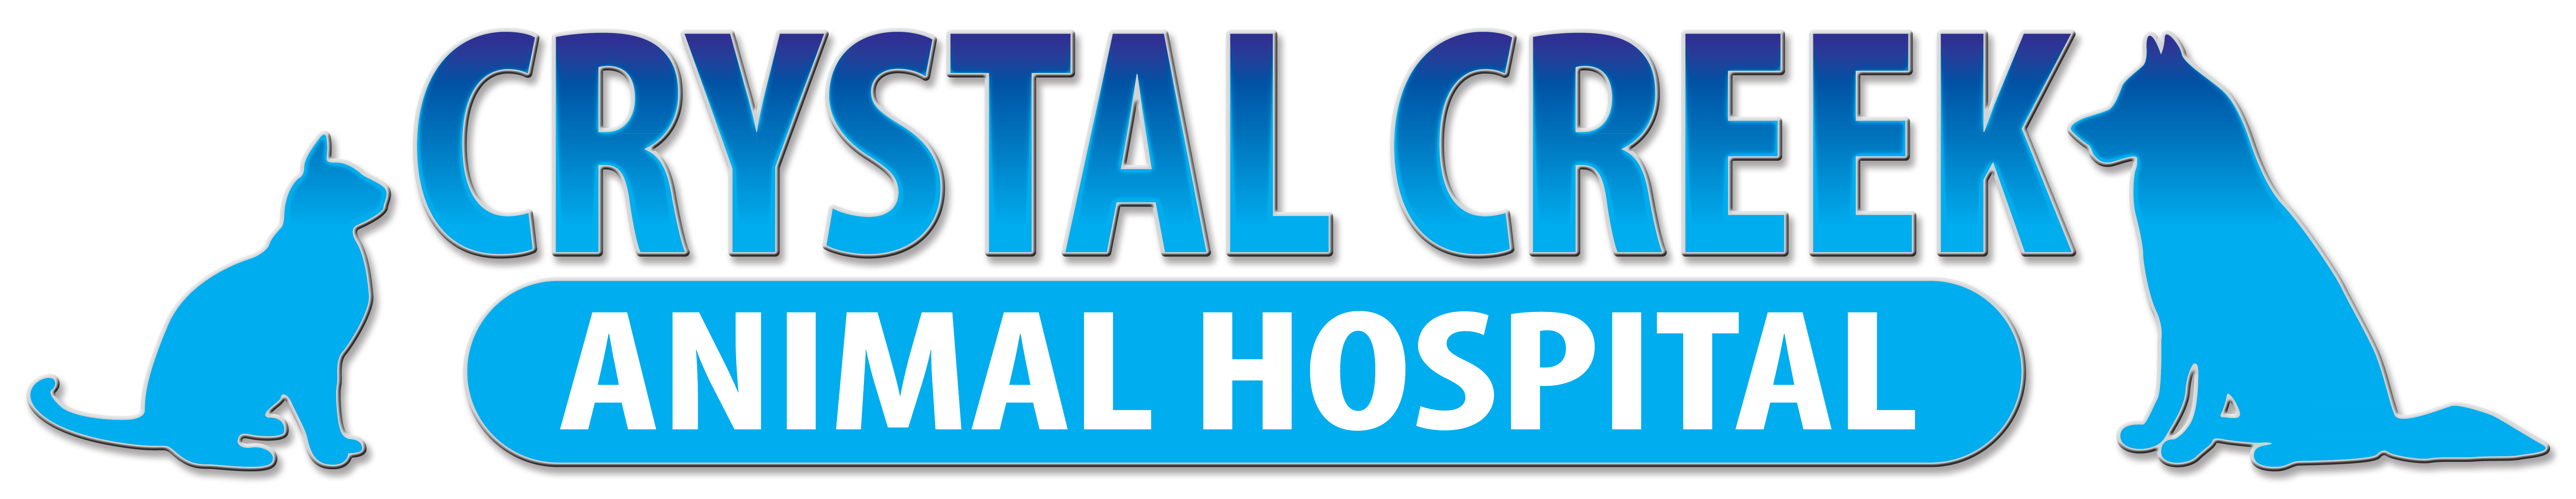 Crystal Creek Animal Hospital Logo